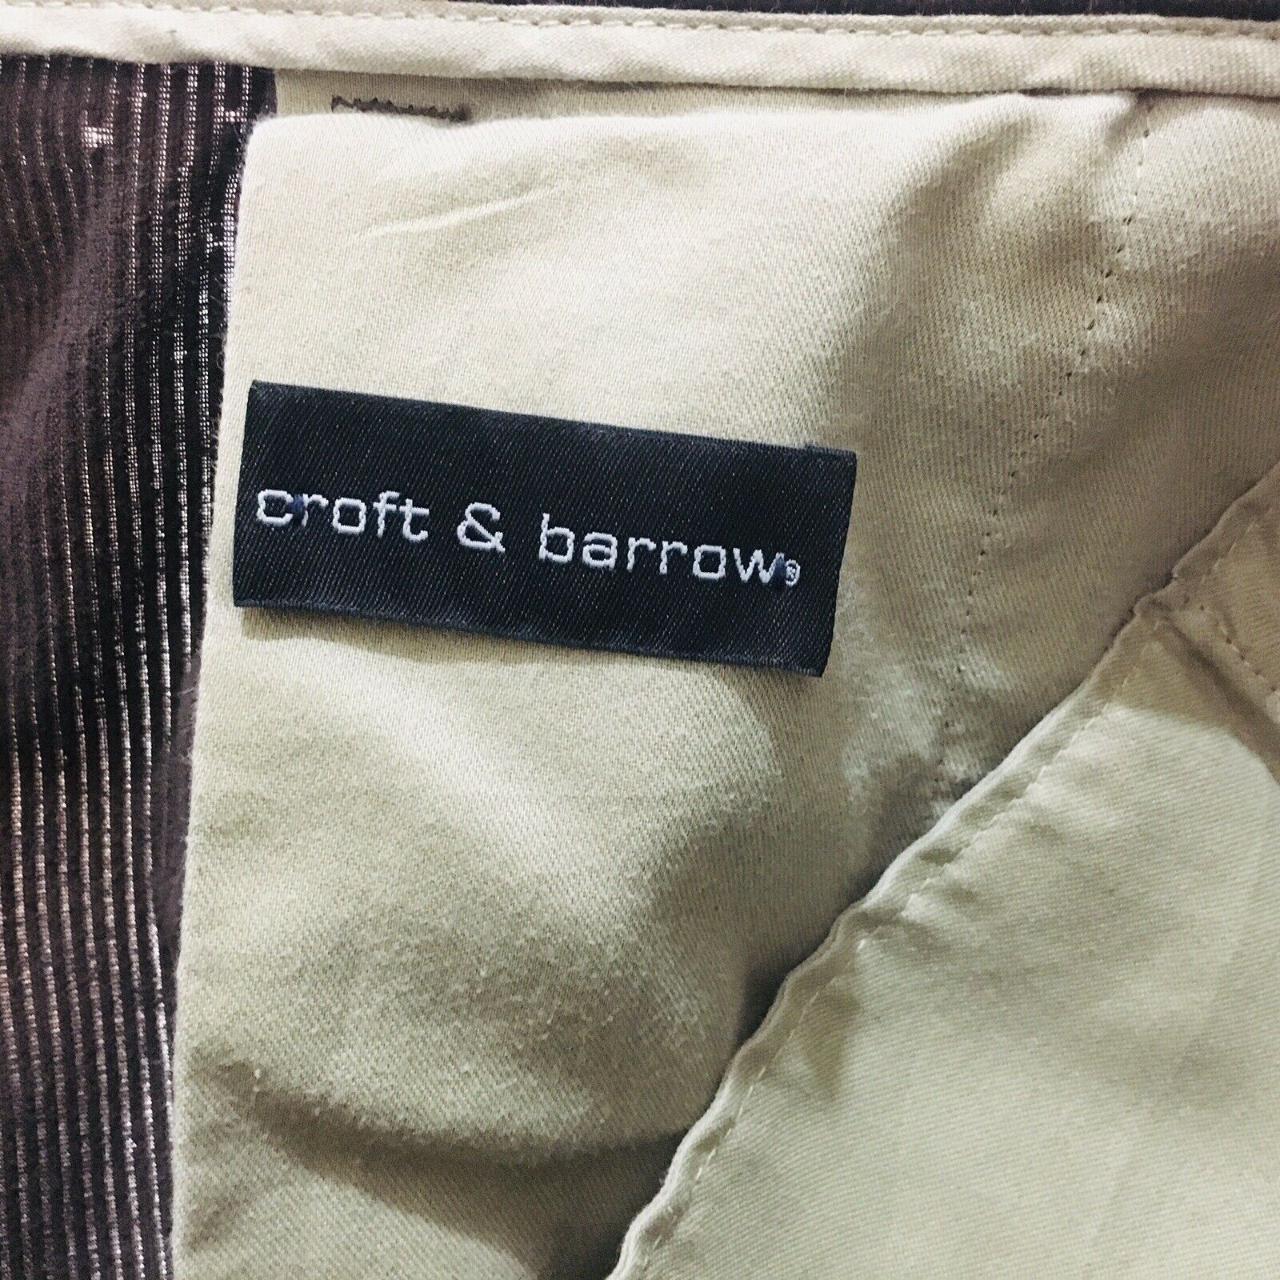 Product Image 4 - Vintage Corduroy Trousers 

Brand: Croft